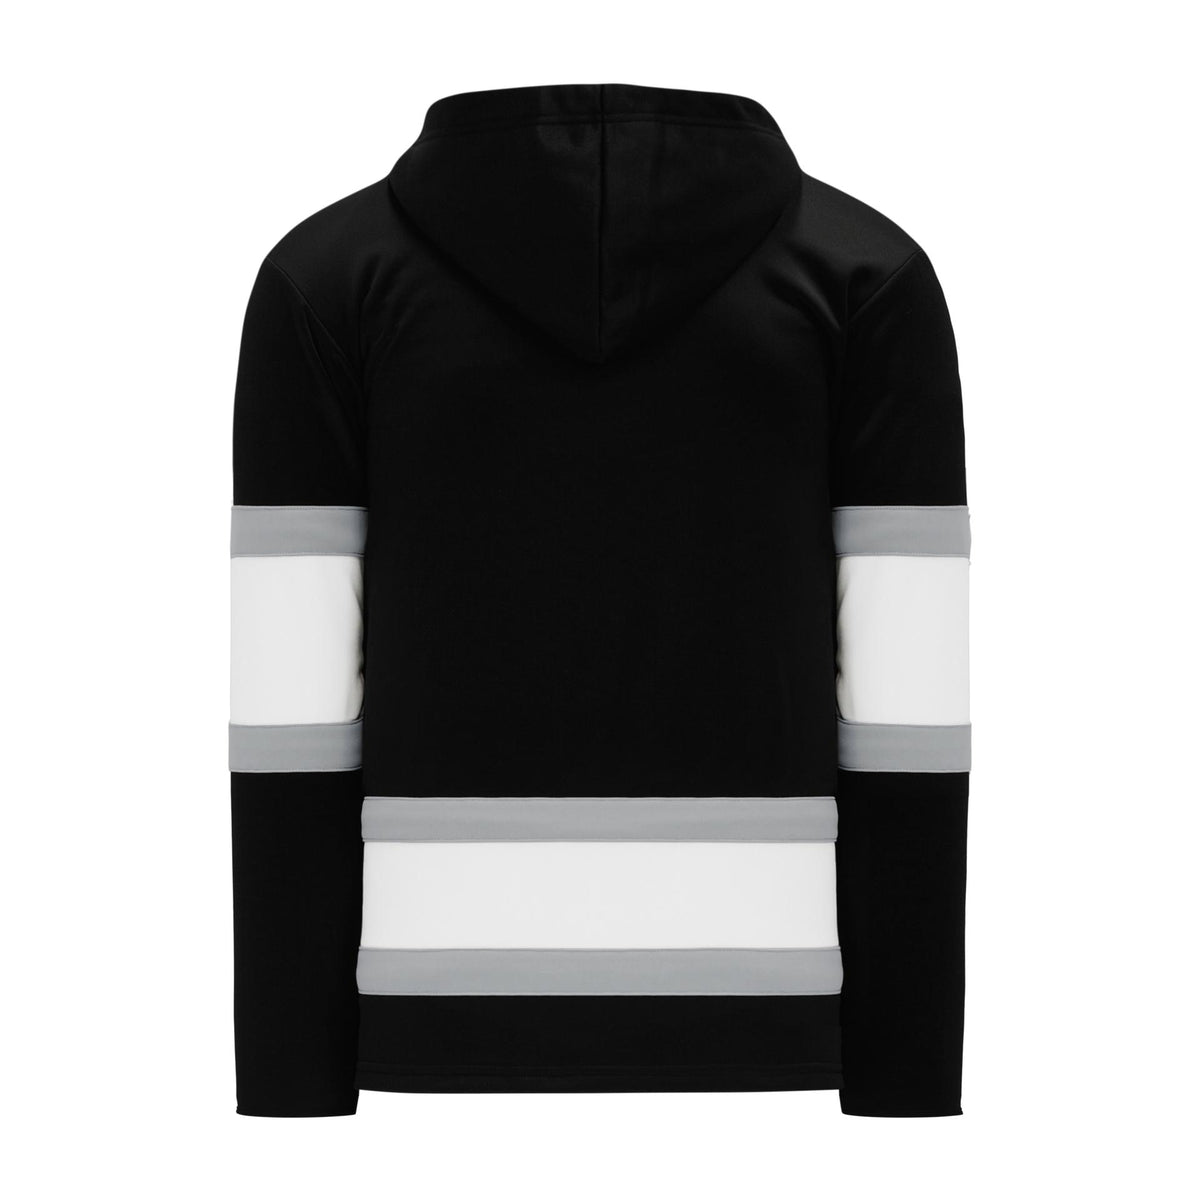 Athletic Knit (AK) A1850-614 Chicago Blackhawks Blank Hockey Lace Hoodie Sweatshirt Adult XL